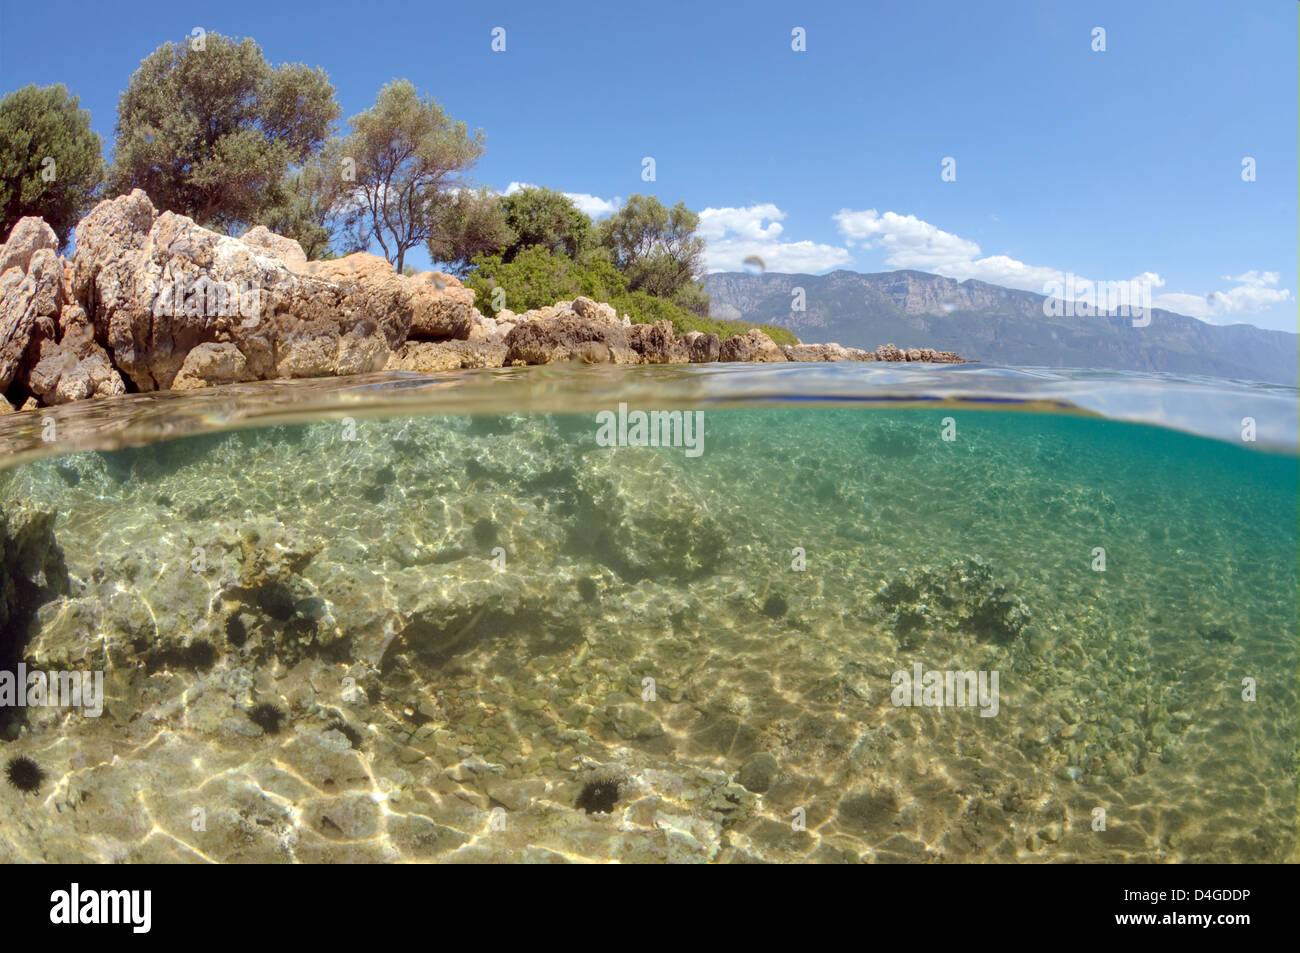 Split level, underwater landscape, Cleopatra island (Sedir Island), Aegean Sea, Turkey Stock Photo